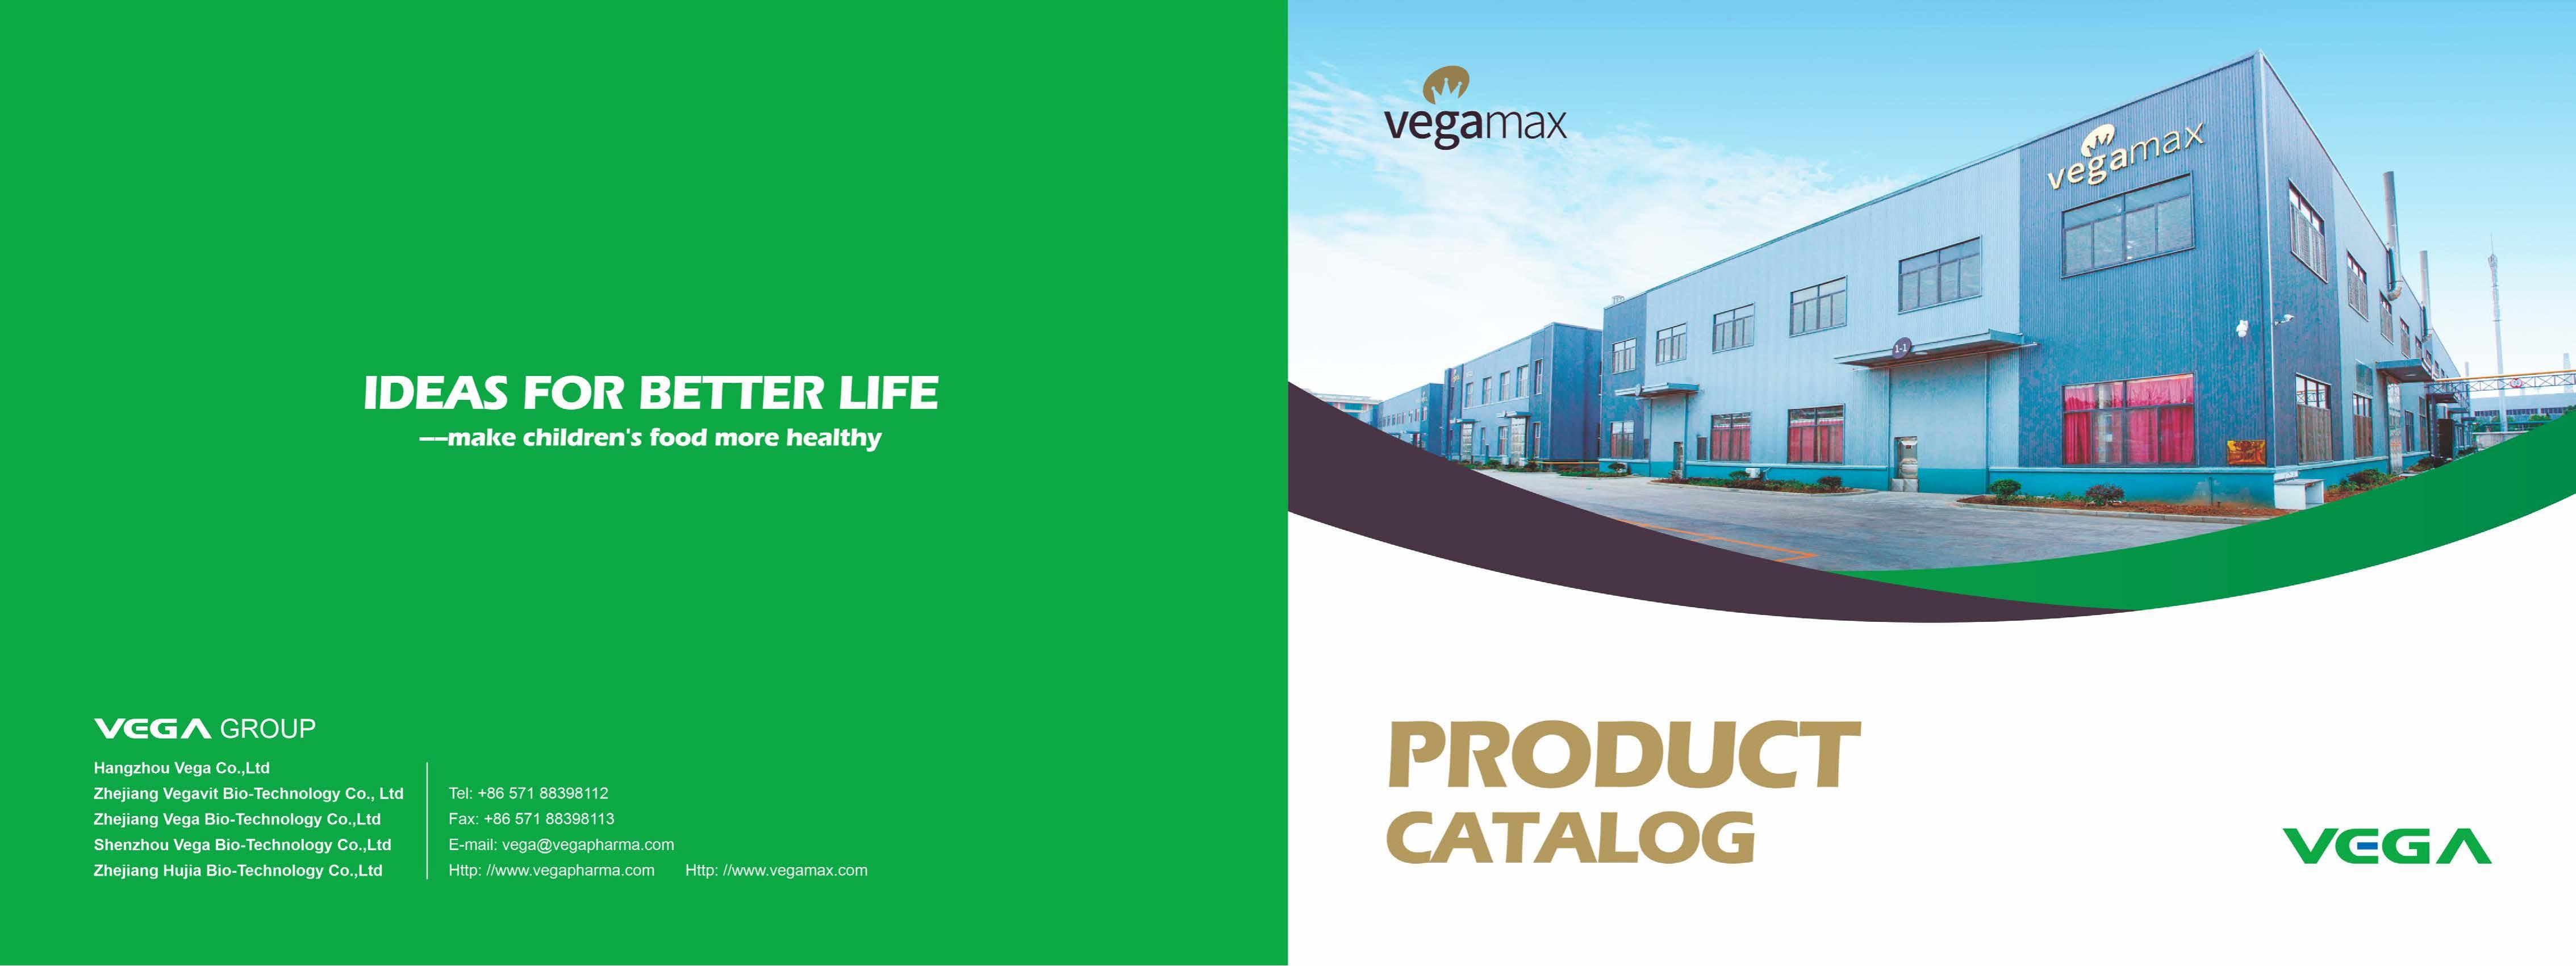 Vega Group catalogue for additives.jpg